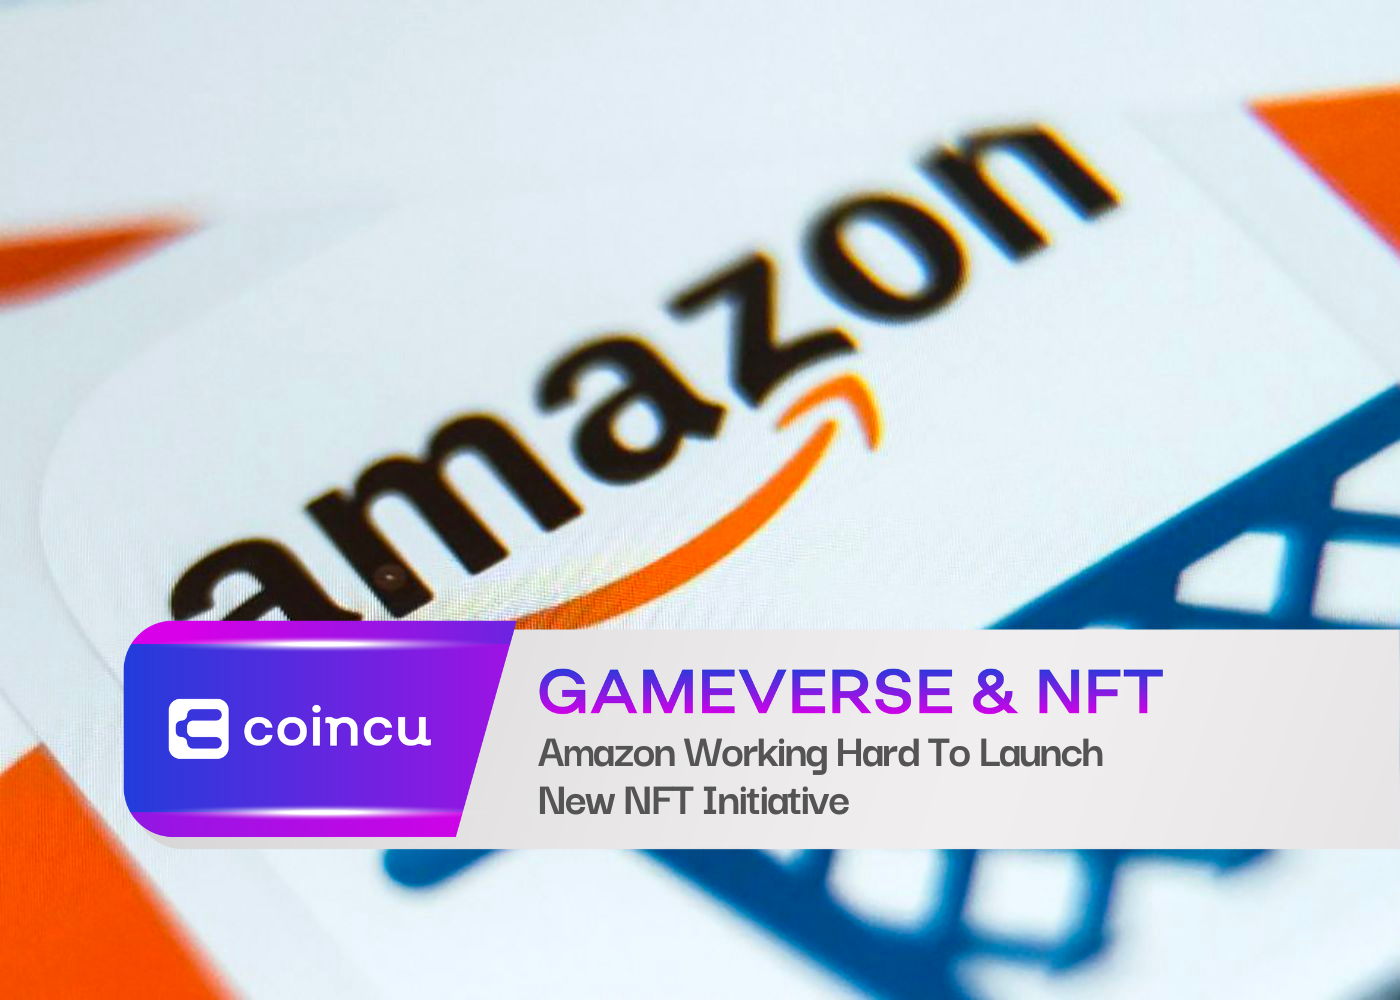 Amazon Working Hard To Launch New NFT Initiative